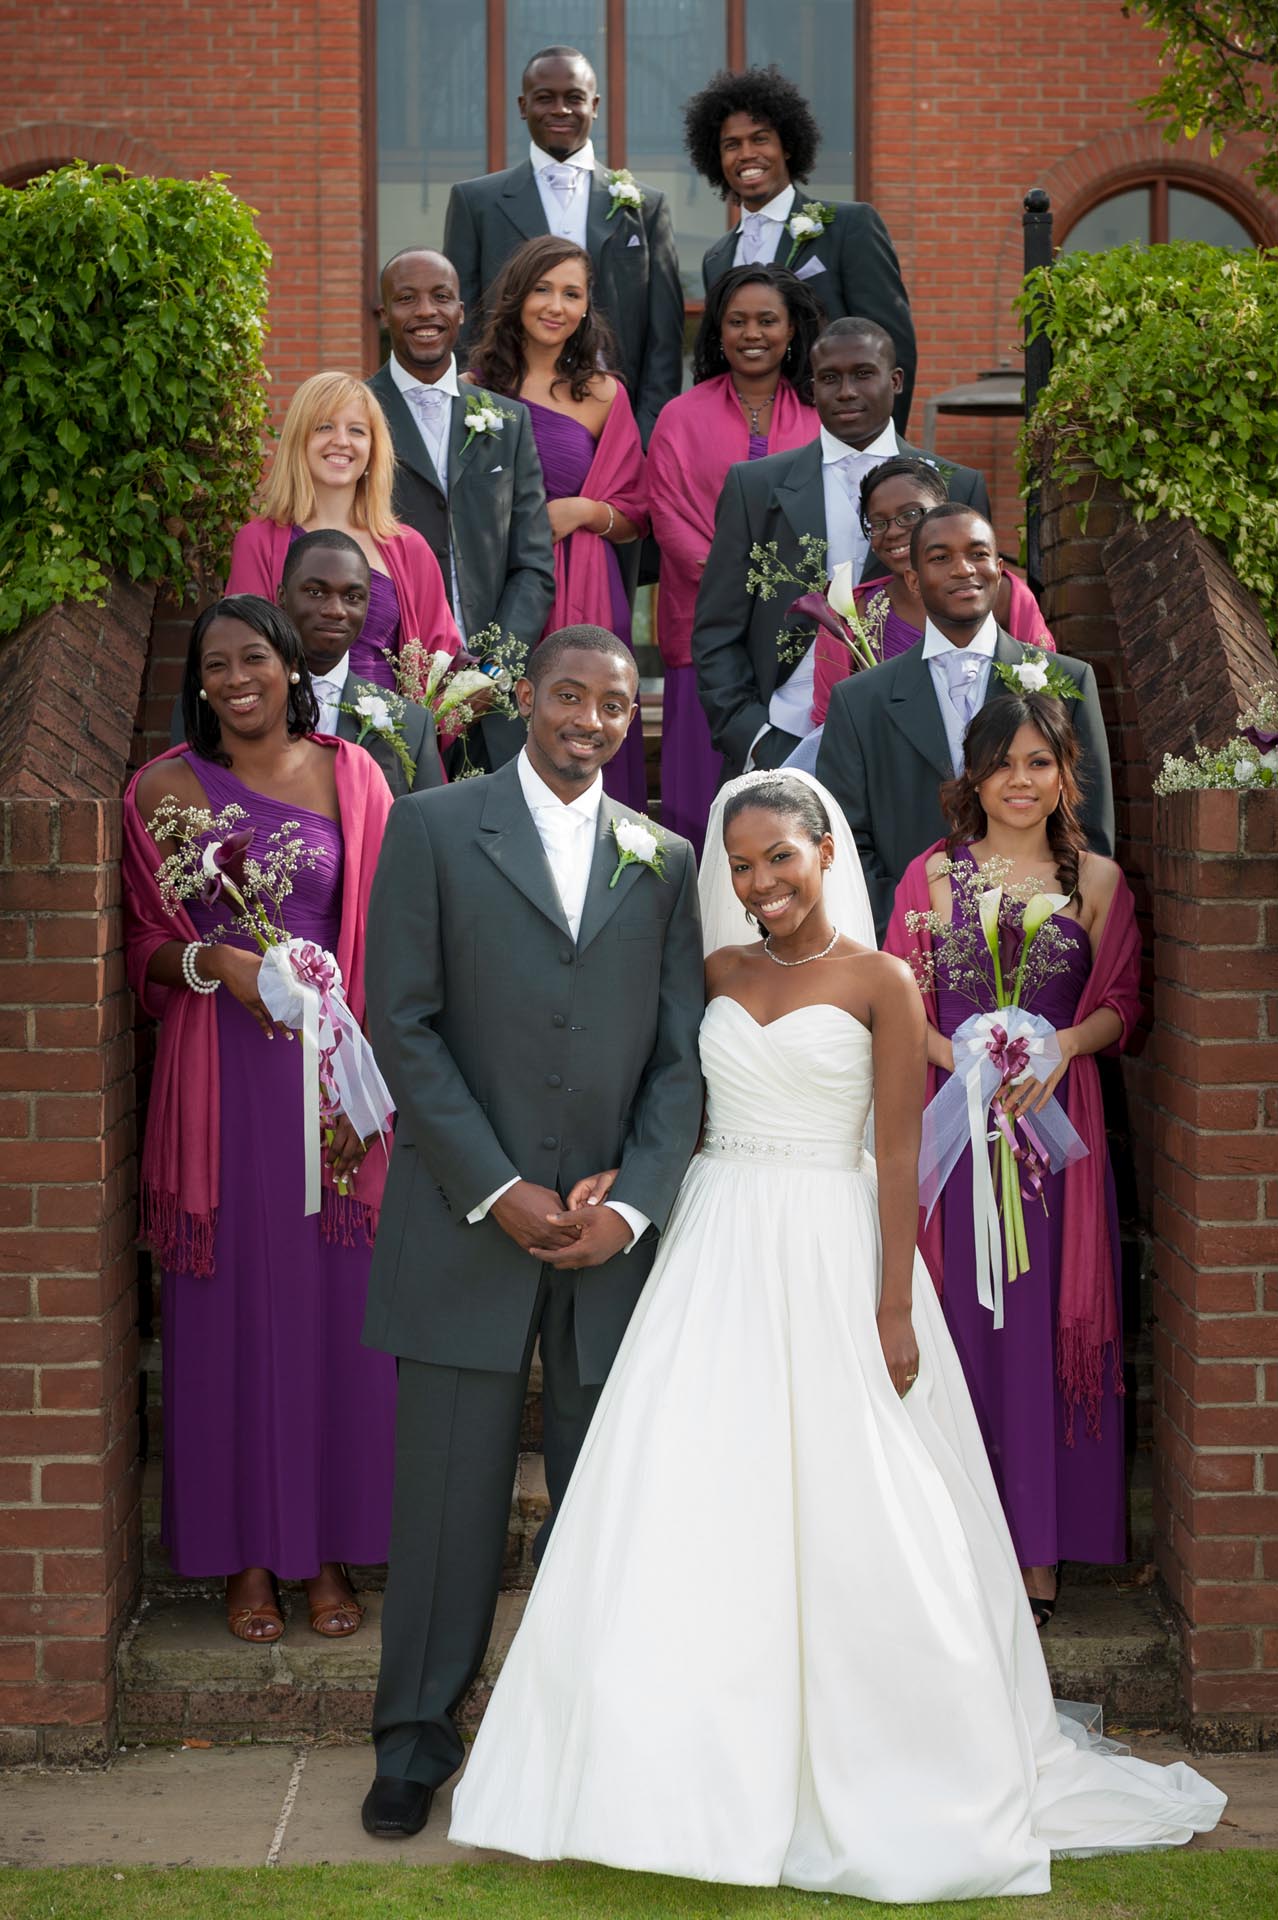 Black skin matters wedding photographer London Romford Essex wedding photographer 171315